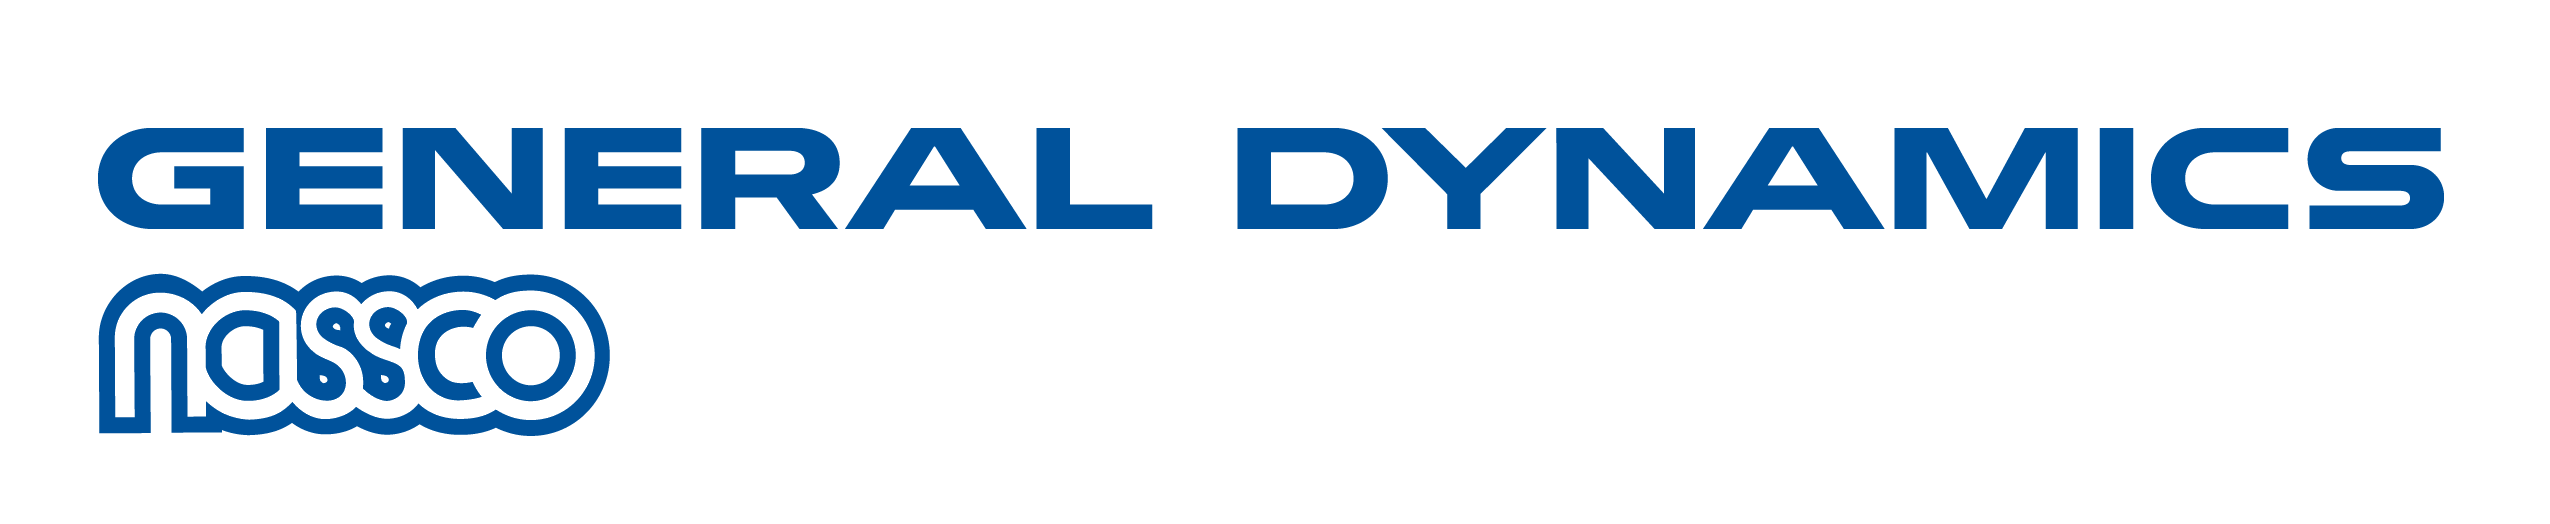 General Dynamics Logo - General Dynamics. (GD) ™ General Dynamics Corporation.corpvs